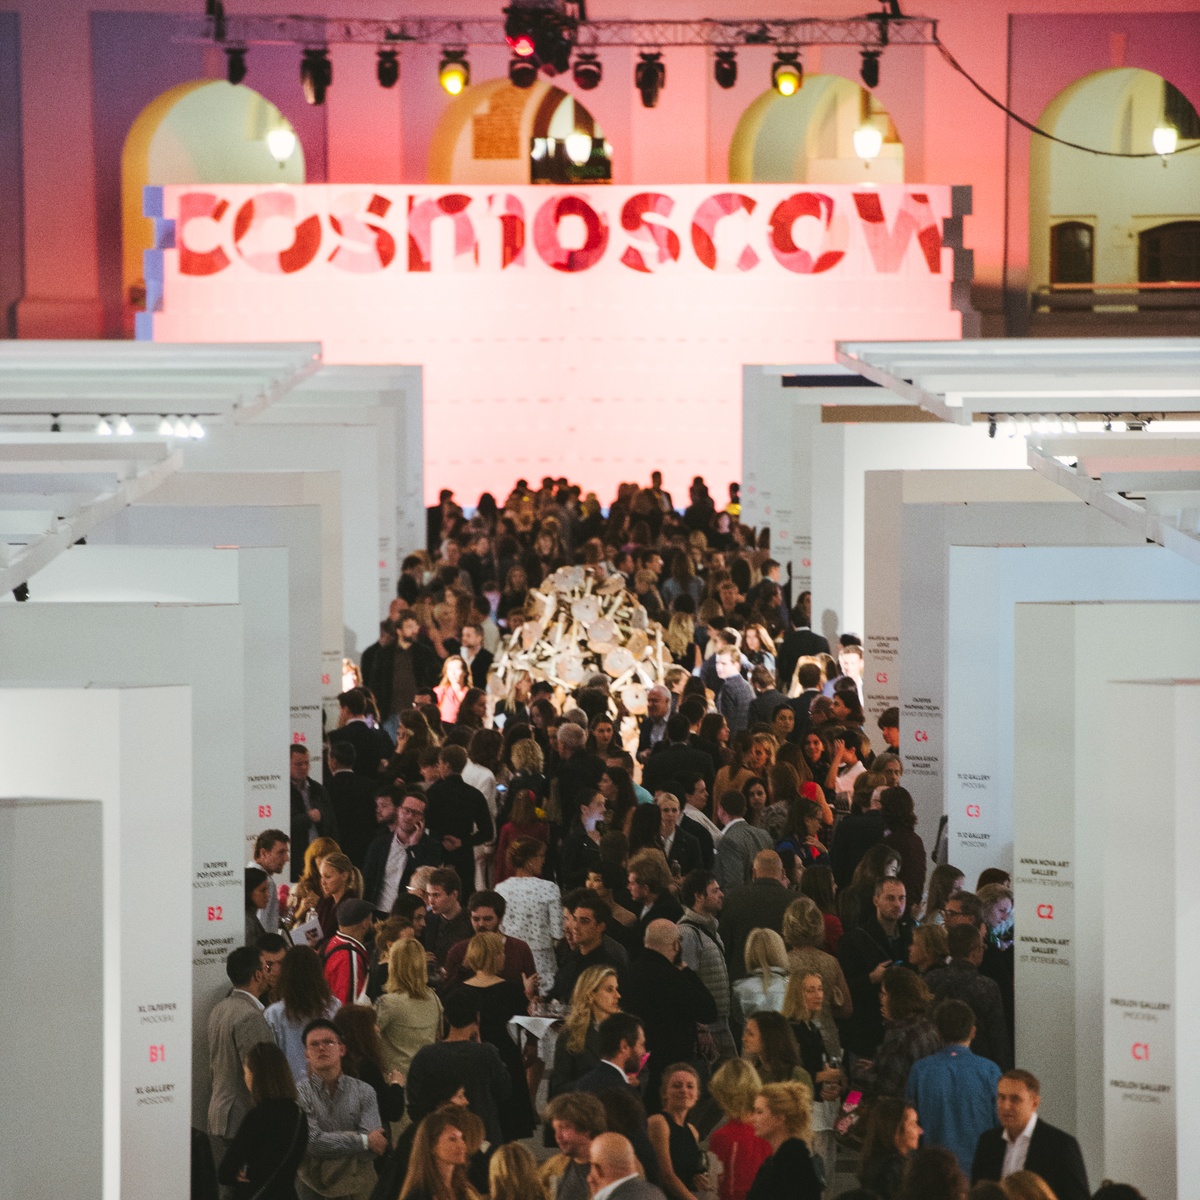 Omelchenko Gallery participates in the contemporary art fair Cosmoscow 2017